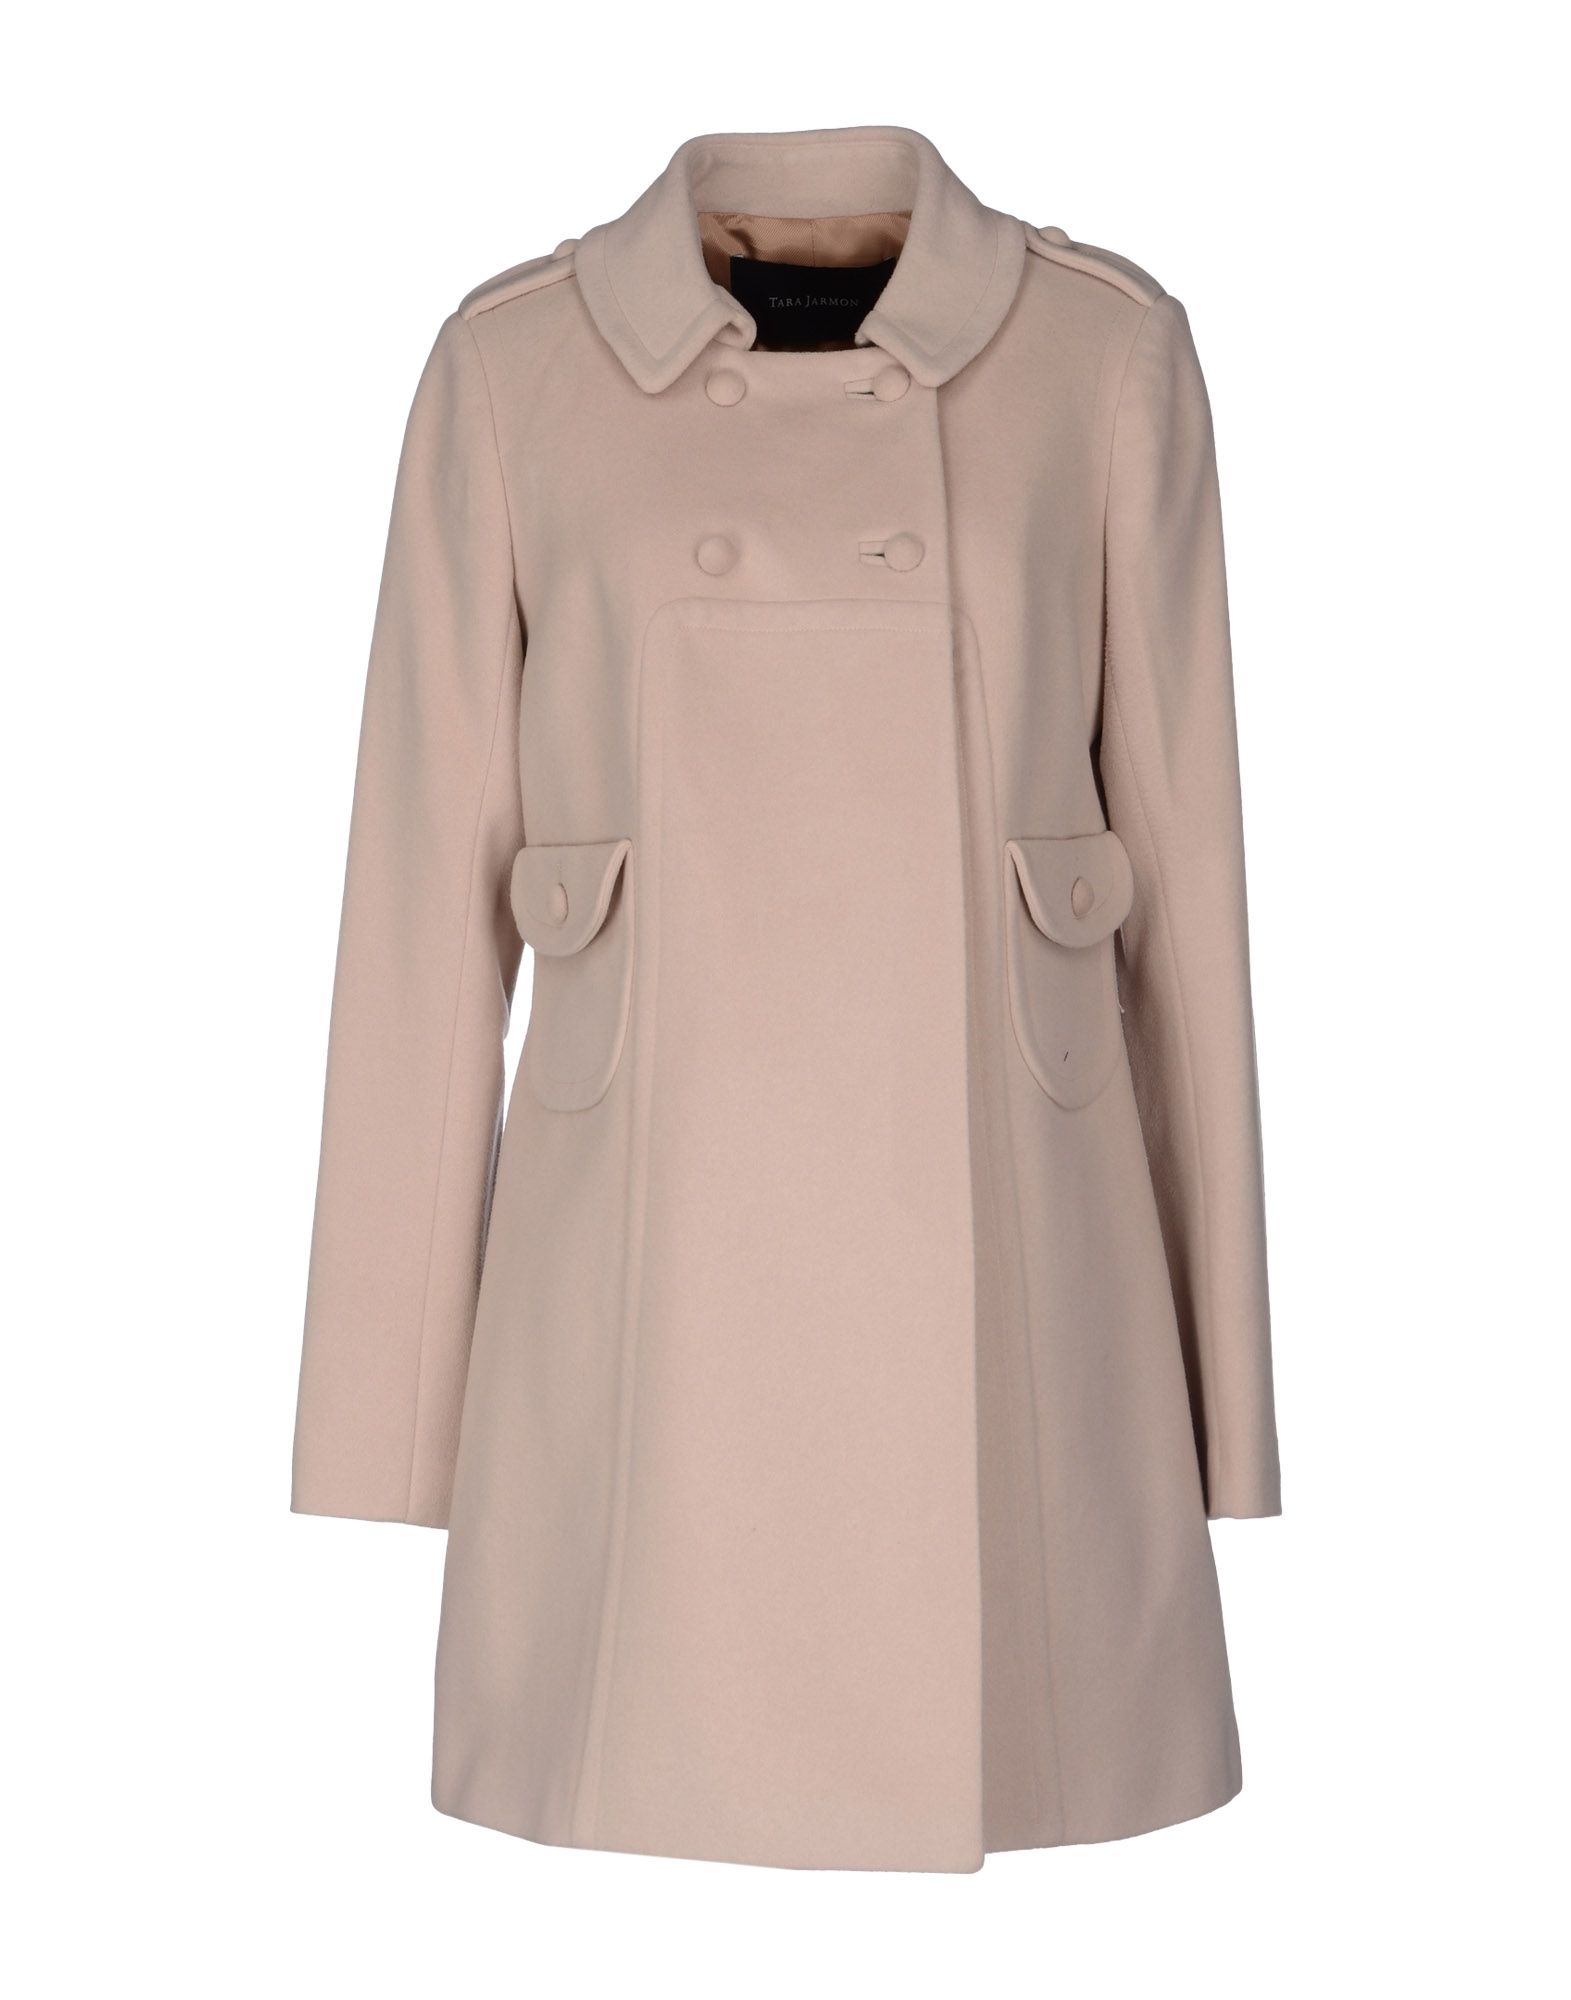 Tara Jarmon Coat in Beige (Light pink) | Lyst